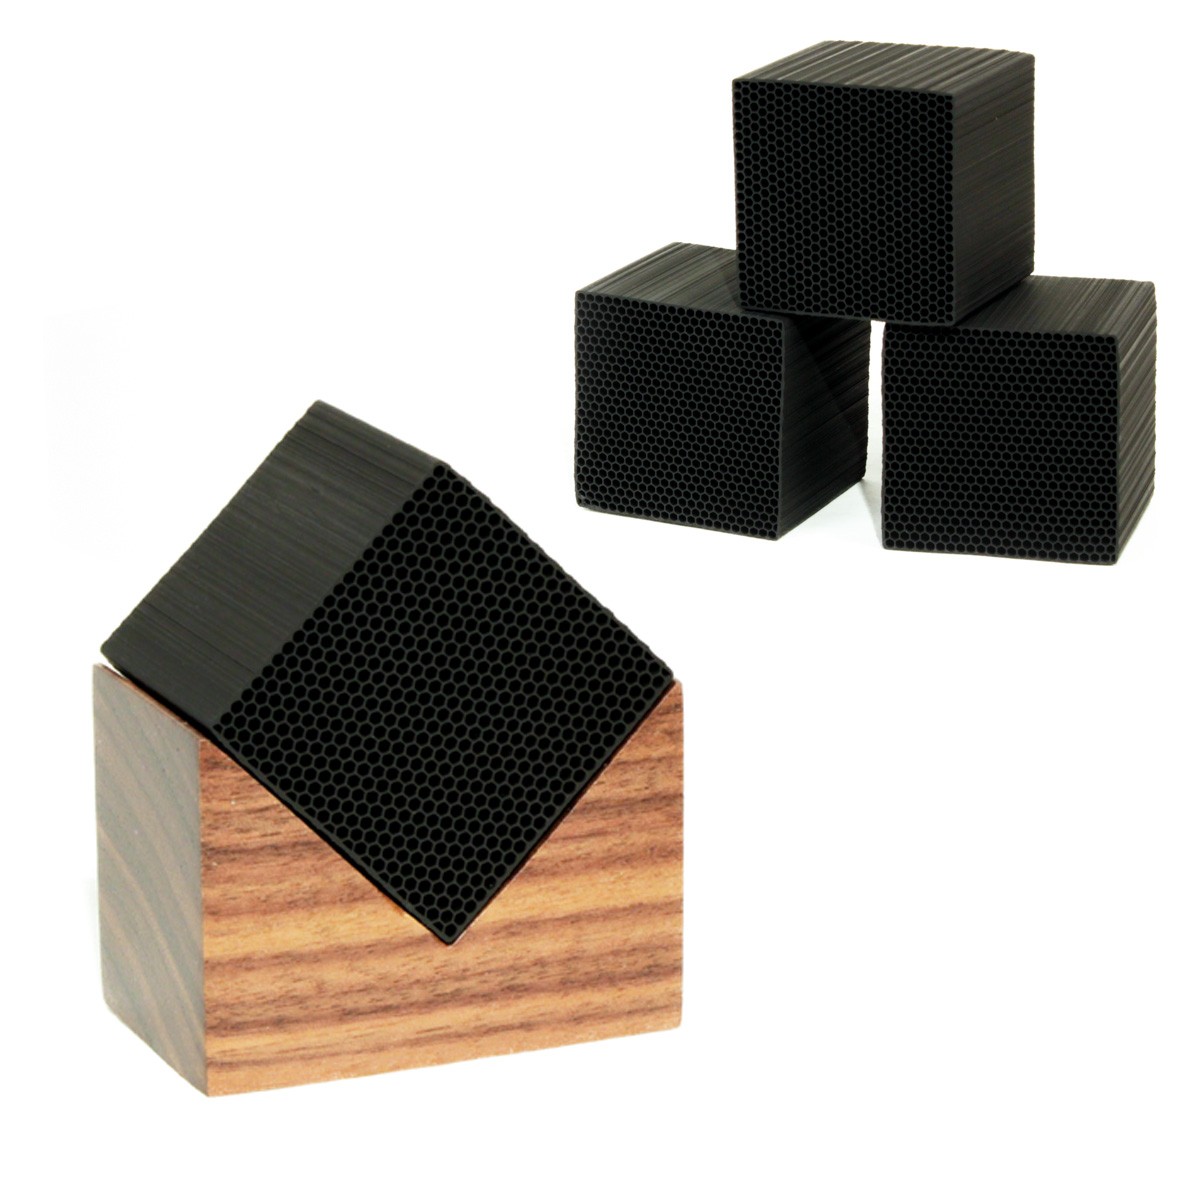 Chikuno cube